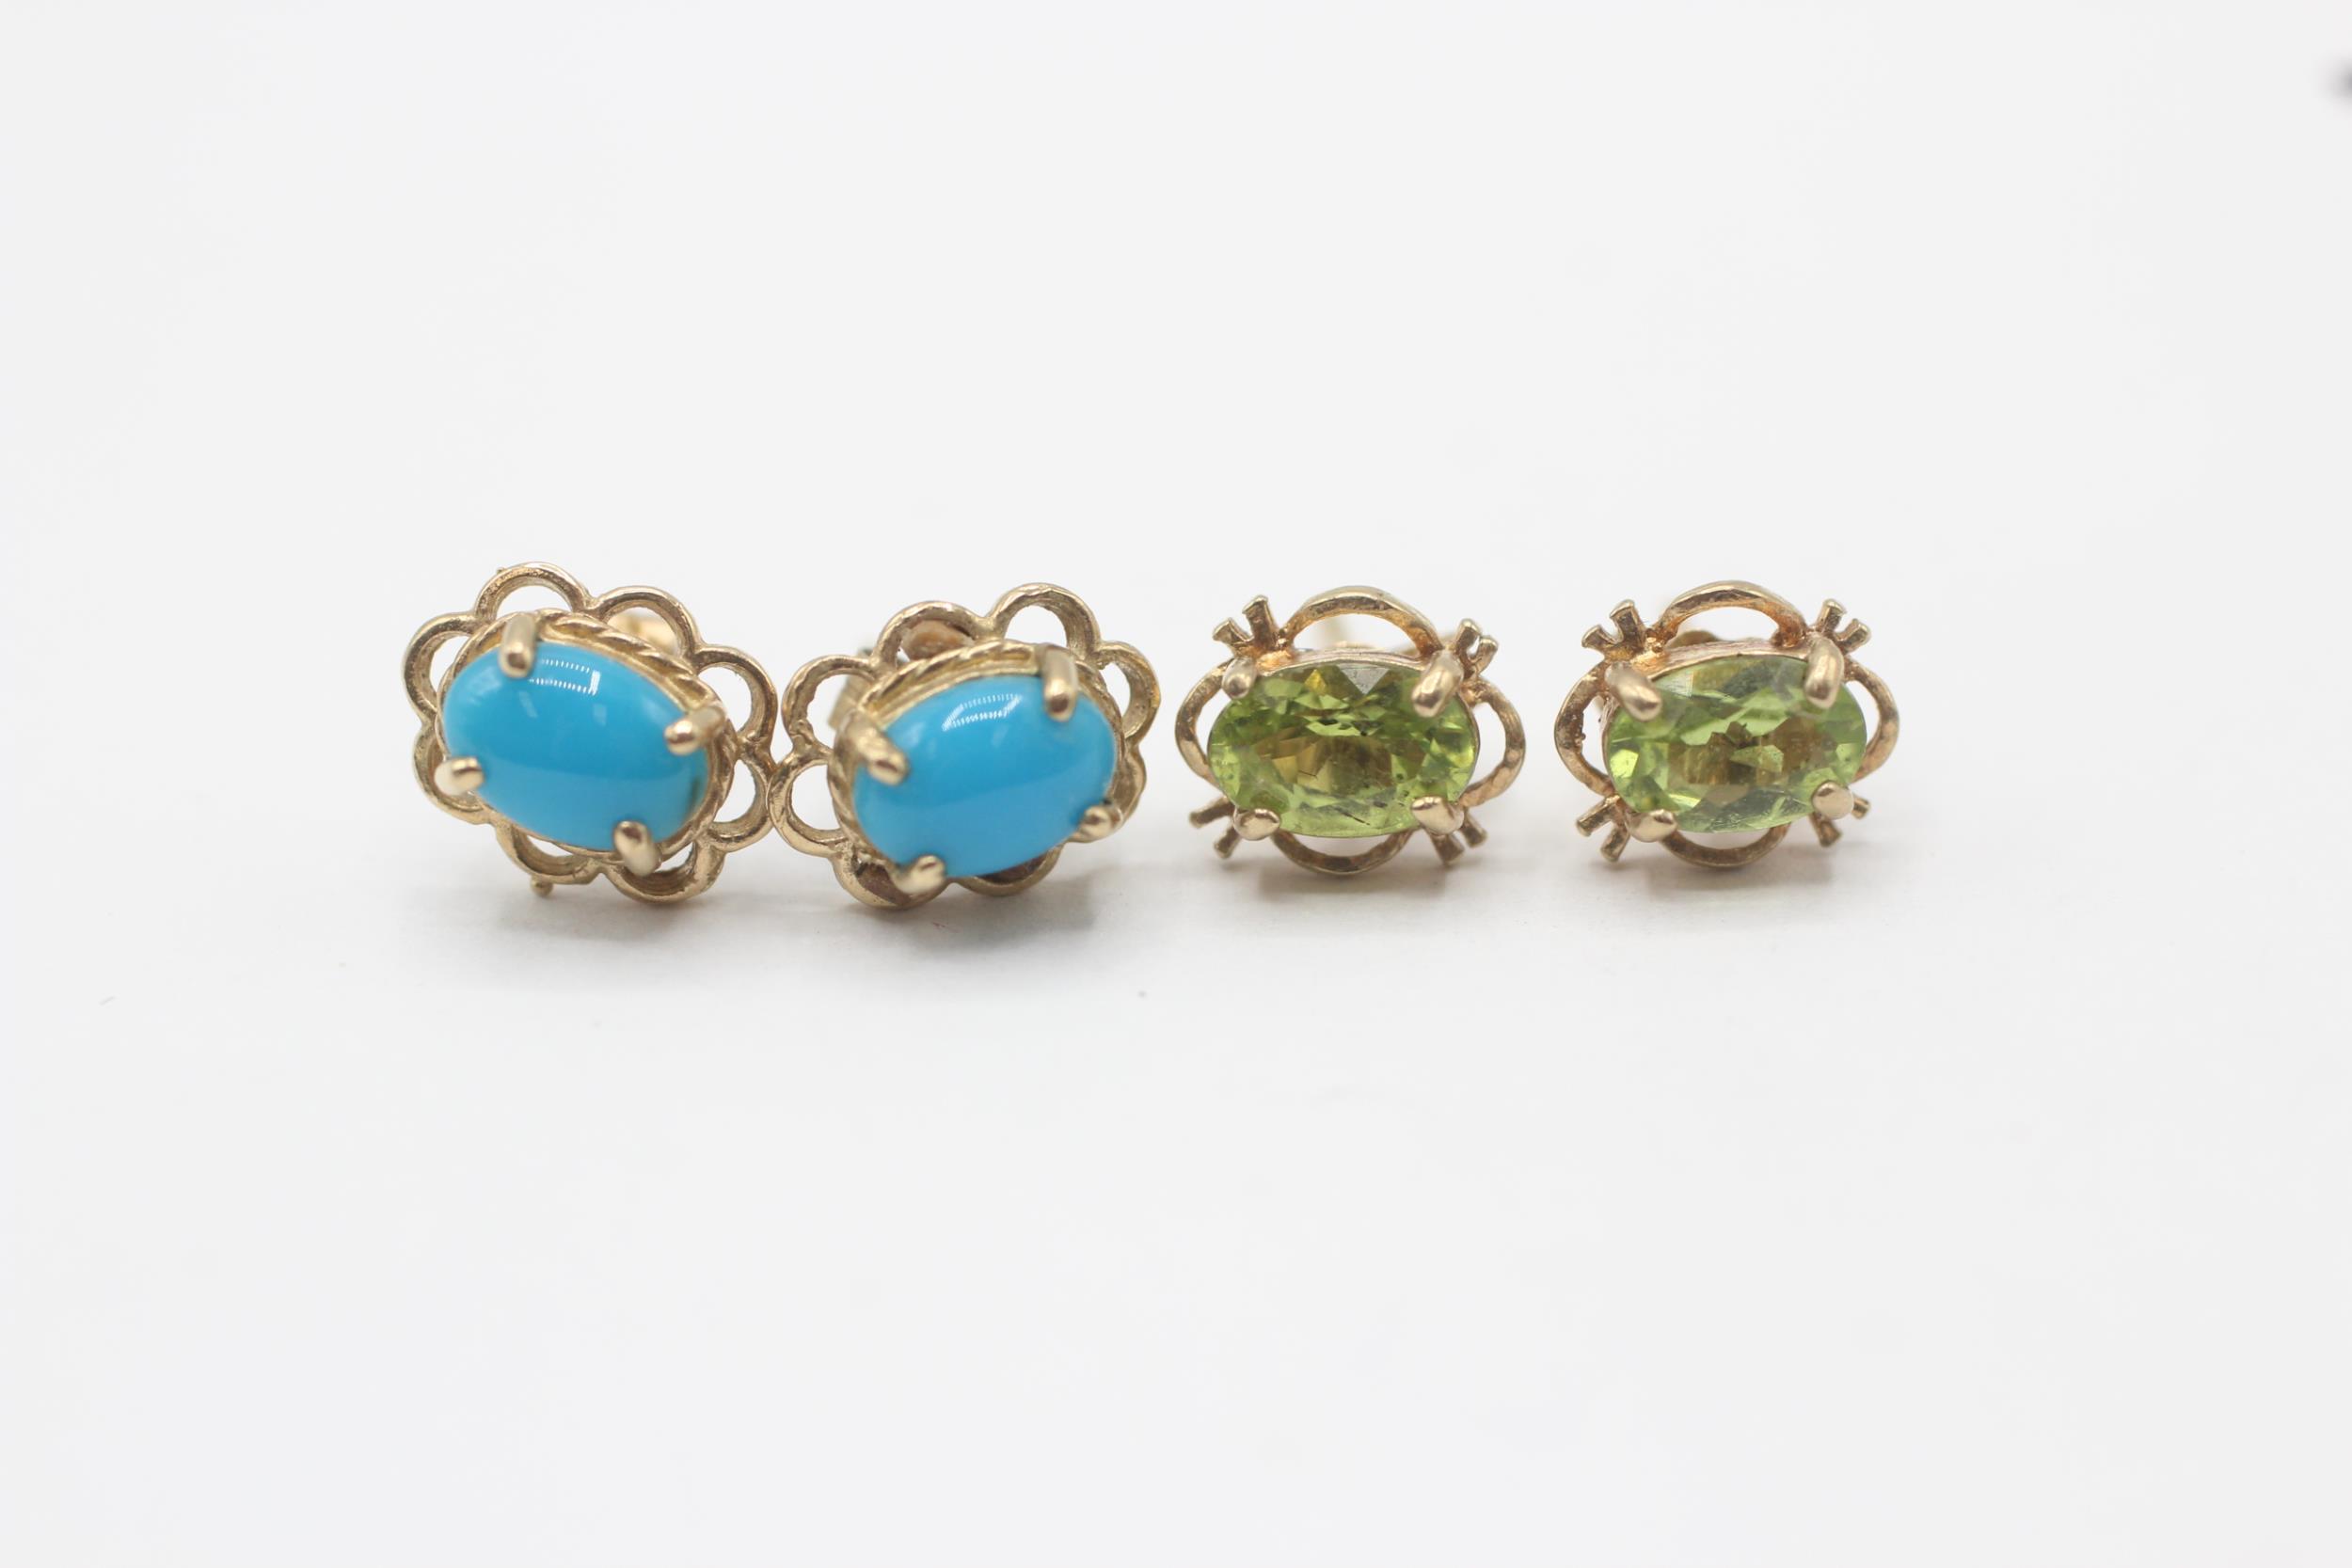 2 x 9ct gold peridot and blue gemstone stud earrings